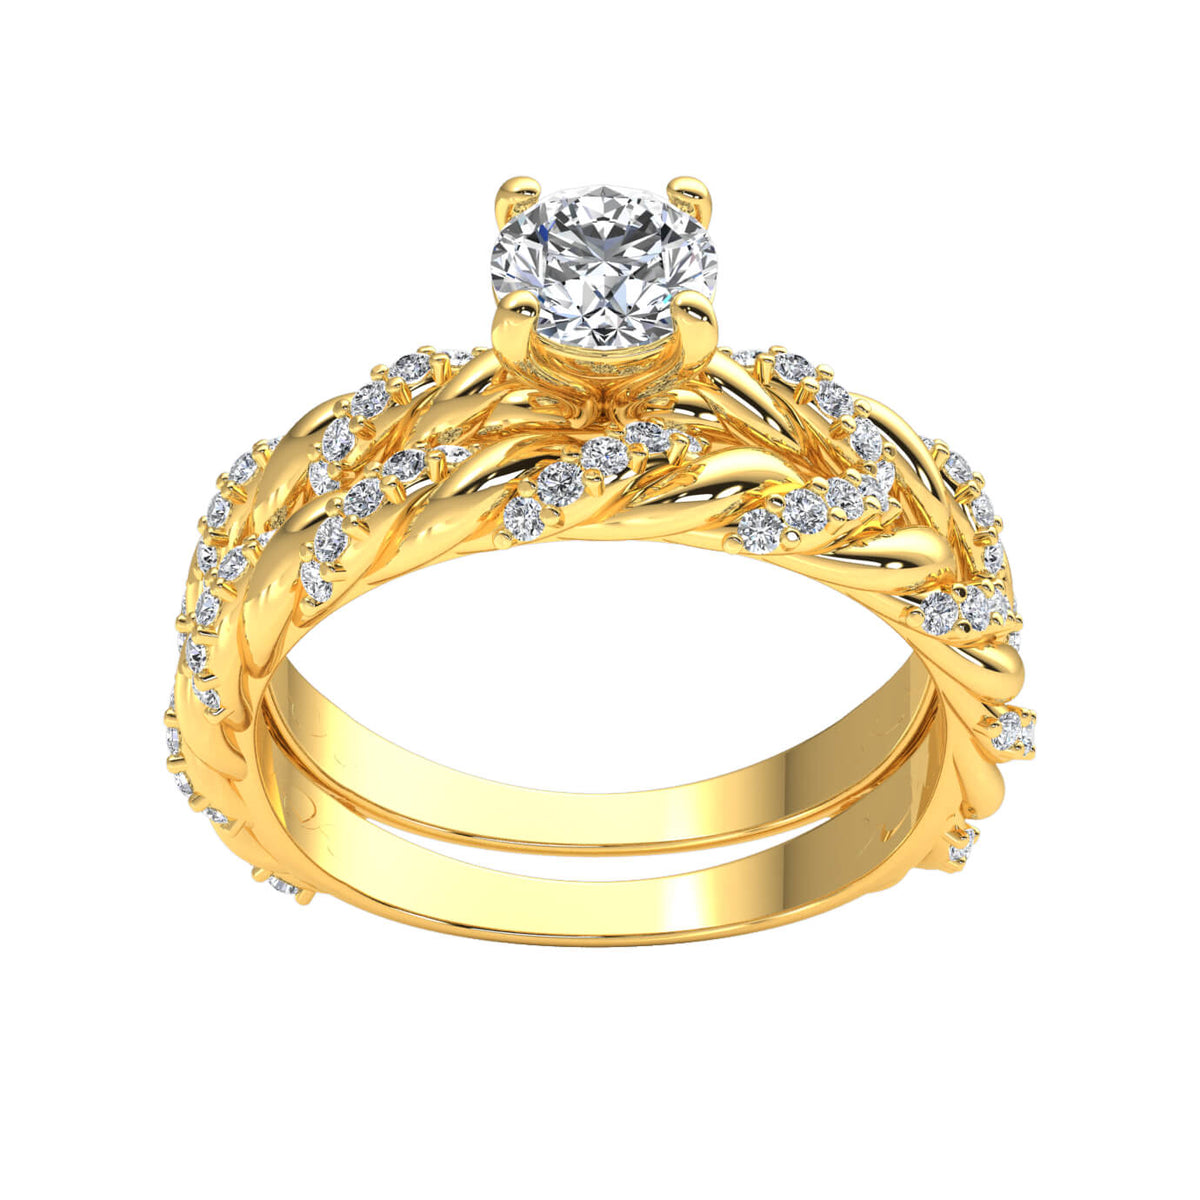 1.00 Ct Diamond GH SI2 Ring JWS6708 14k Gold